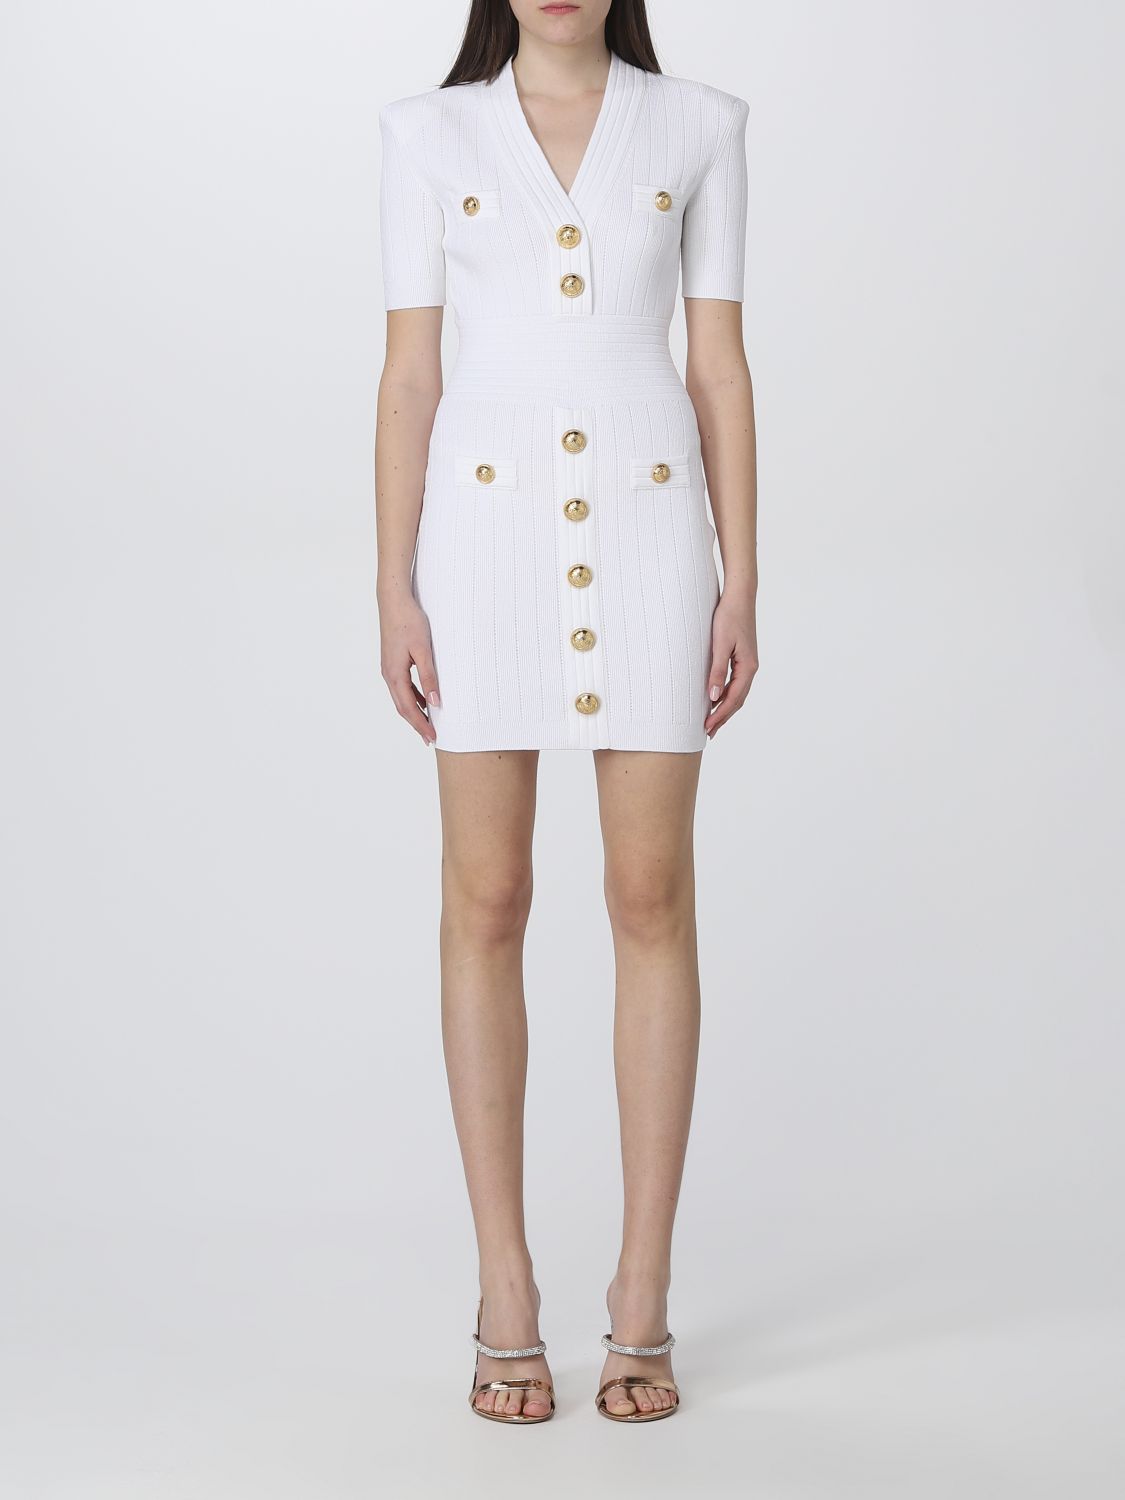 BALMAIN: dress for woman - White | Balmain dress AF0R6045KB07 online on ...